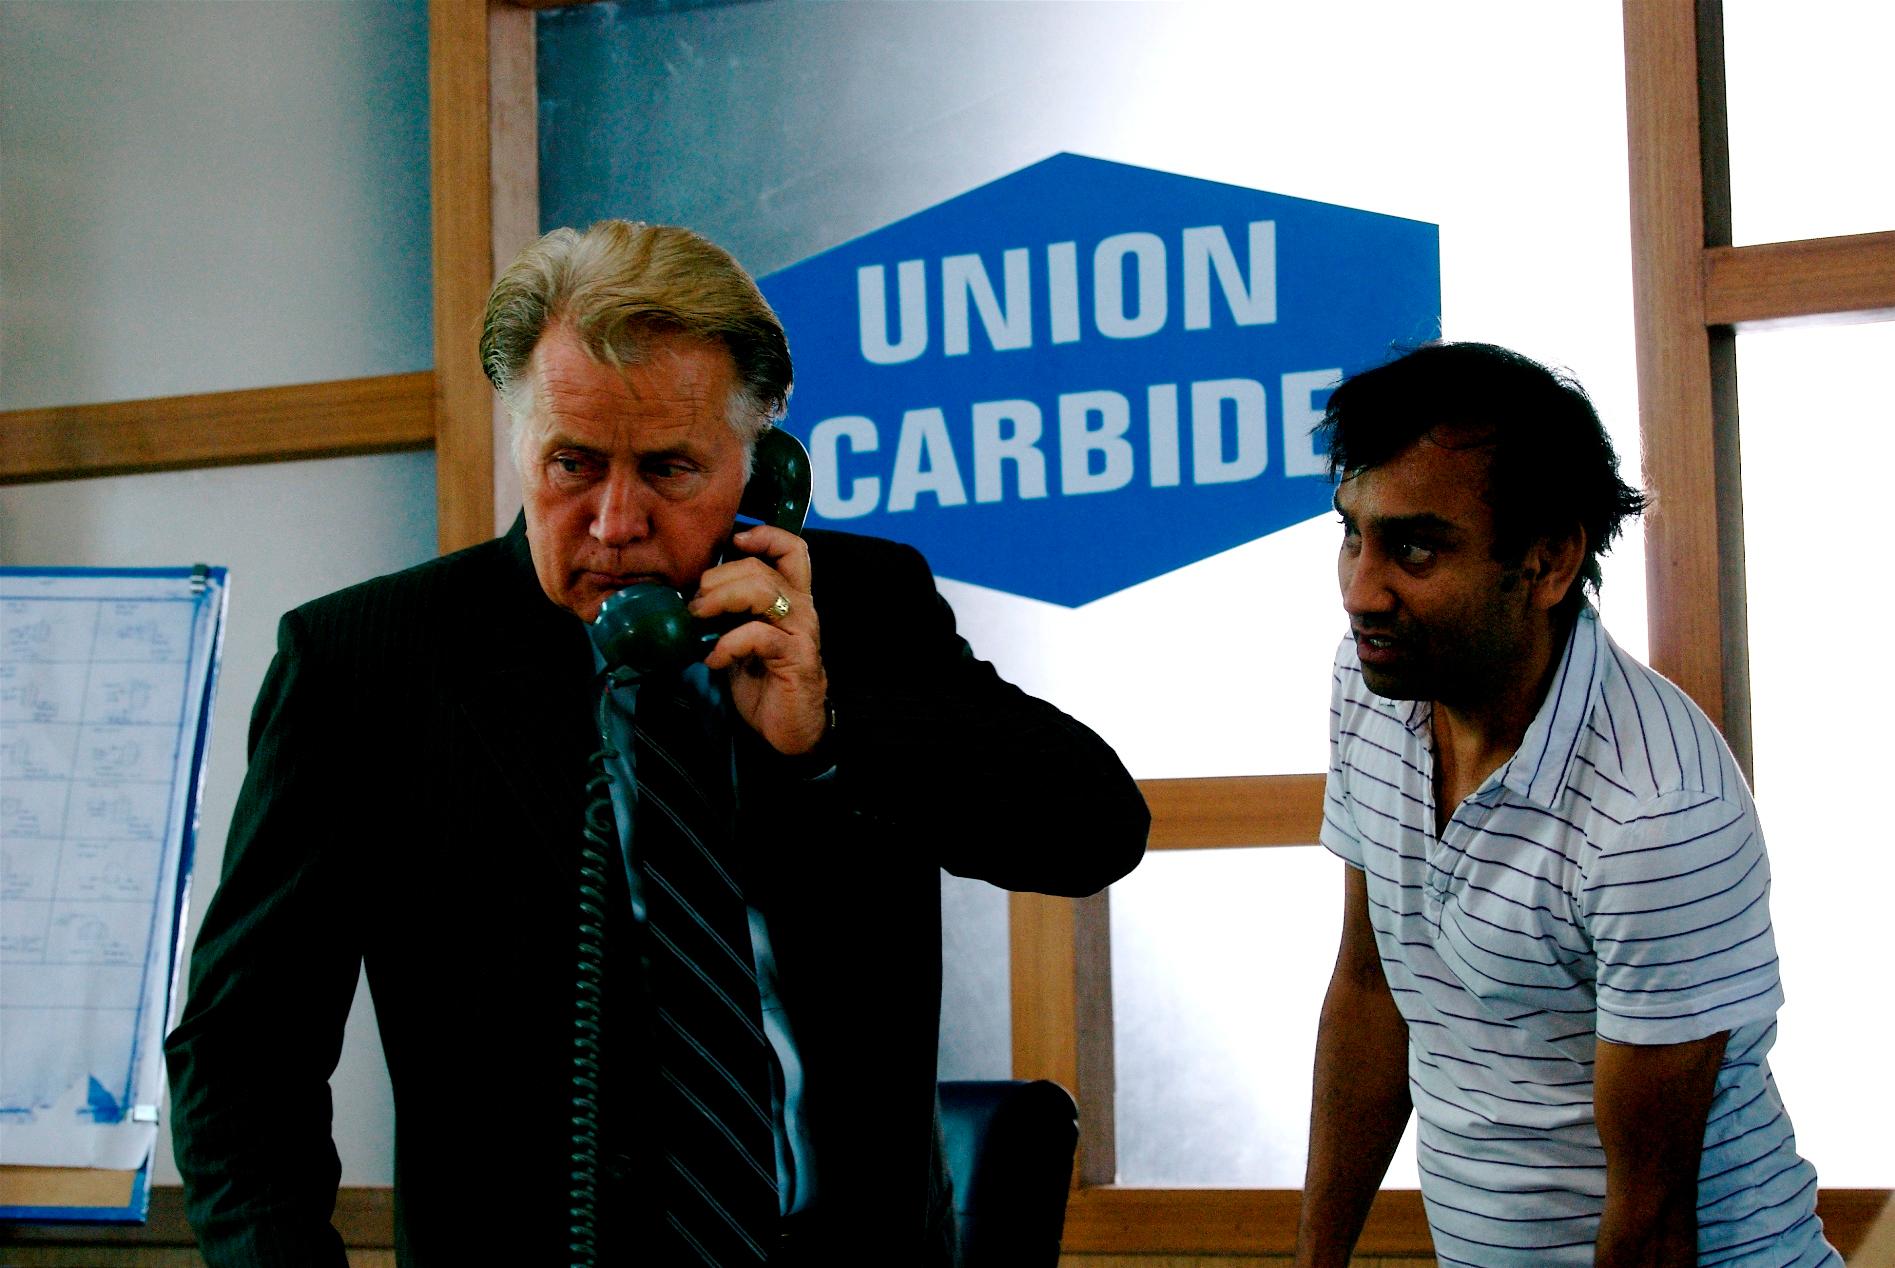 Martin Sheen, playing Union Carbide CEO Warren Anderson, with director Ravi Kumar.